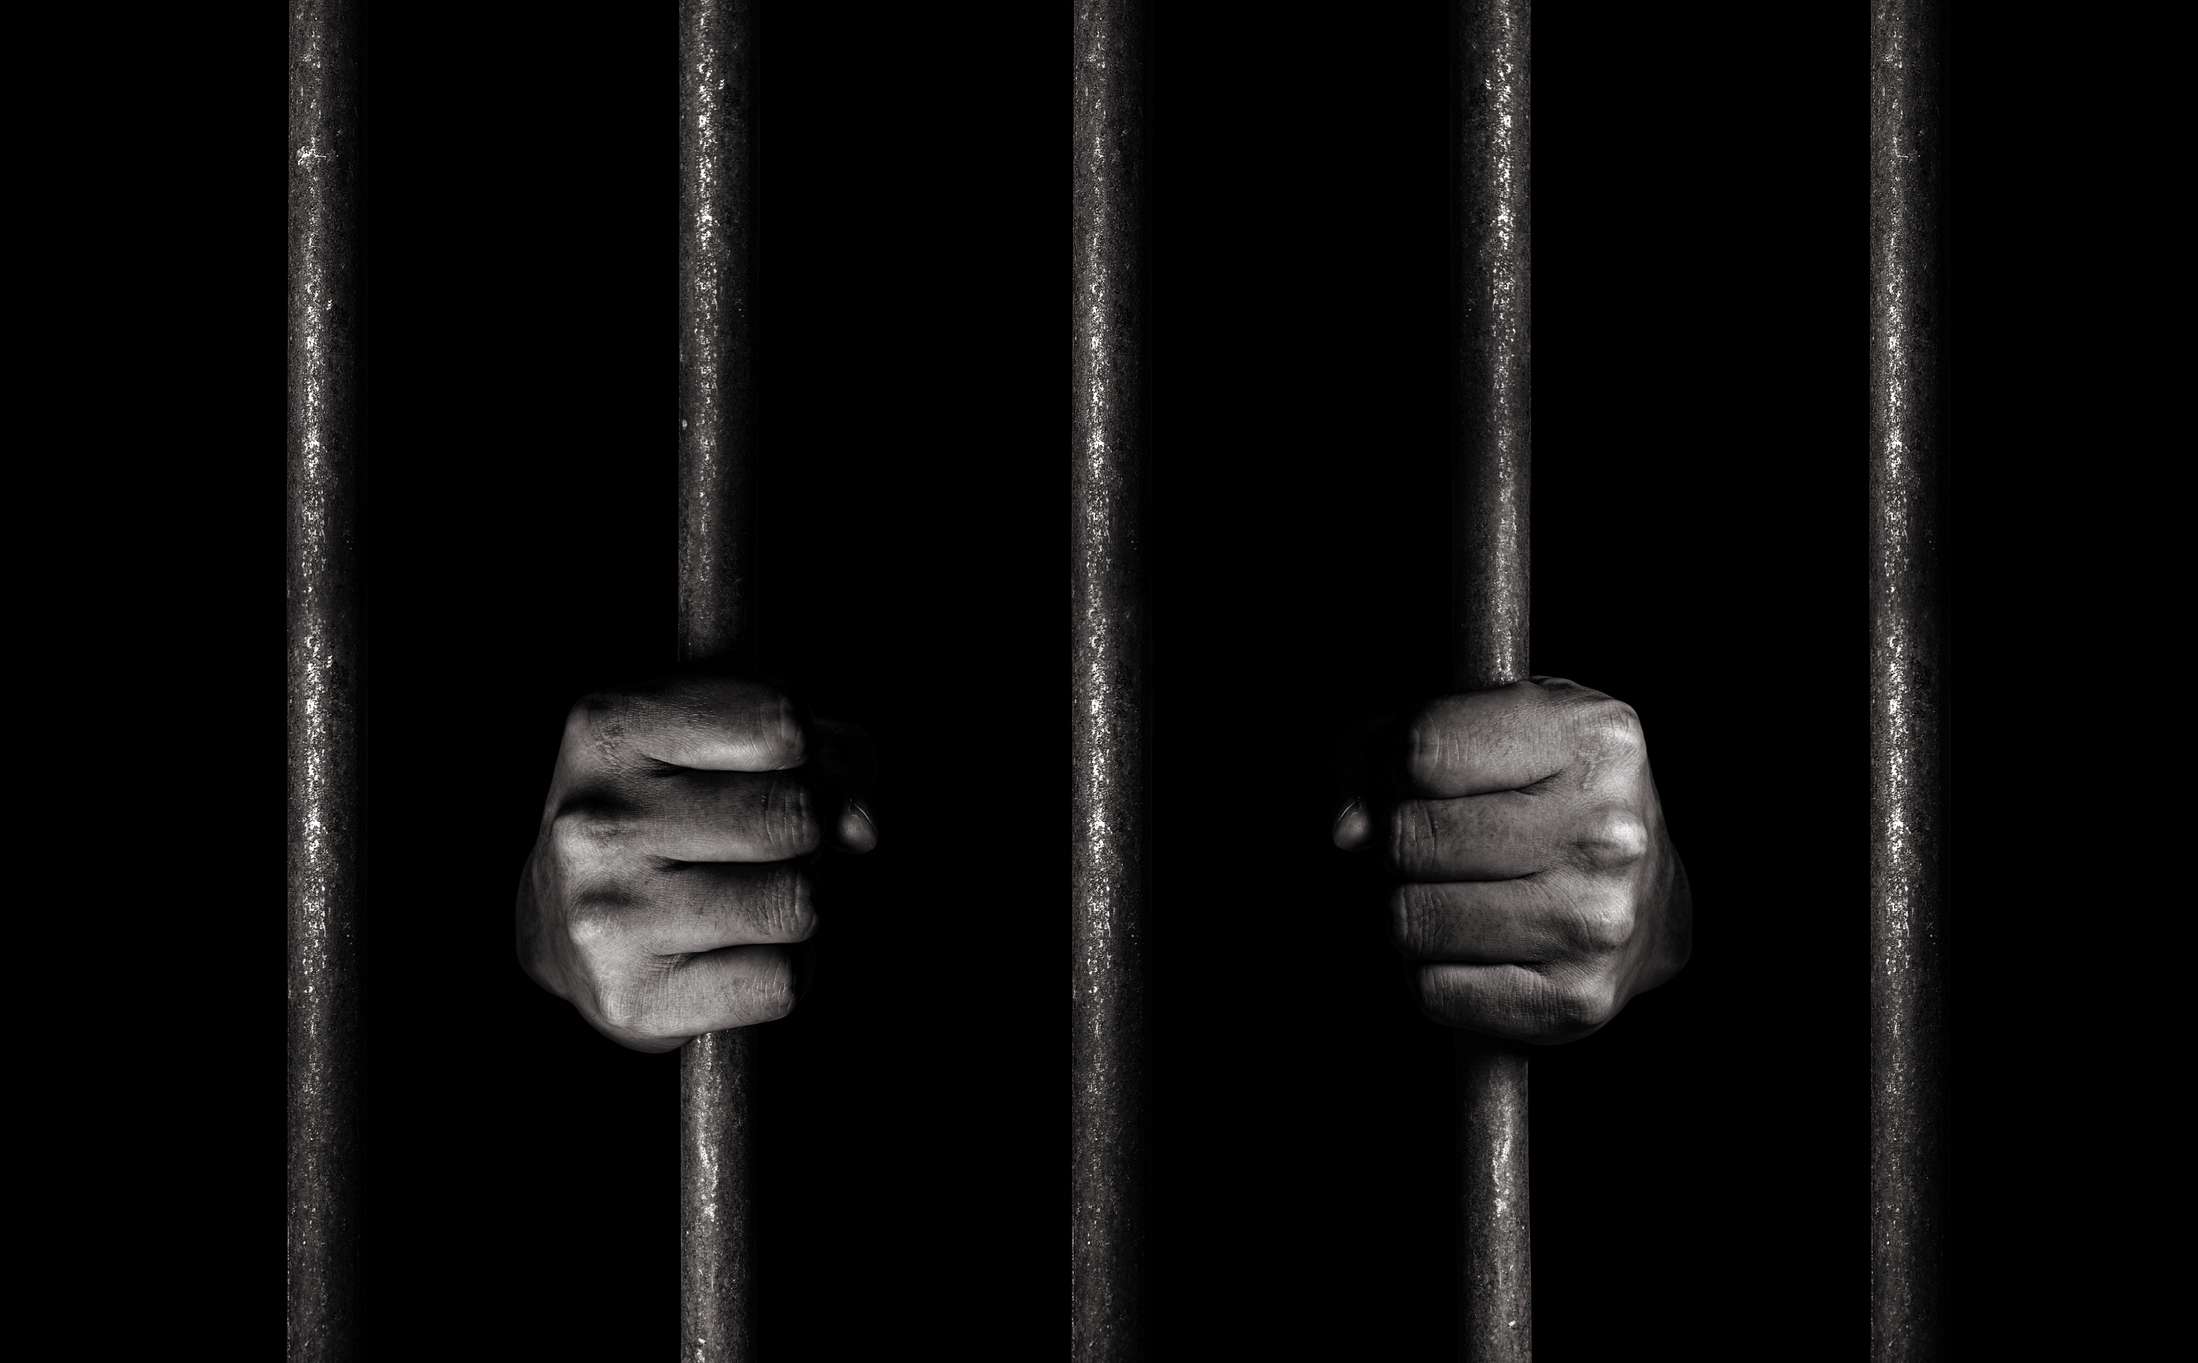 Locked steel prisoner